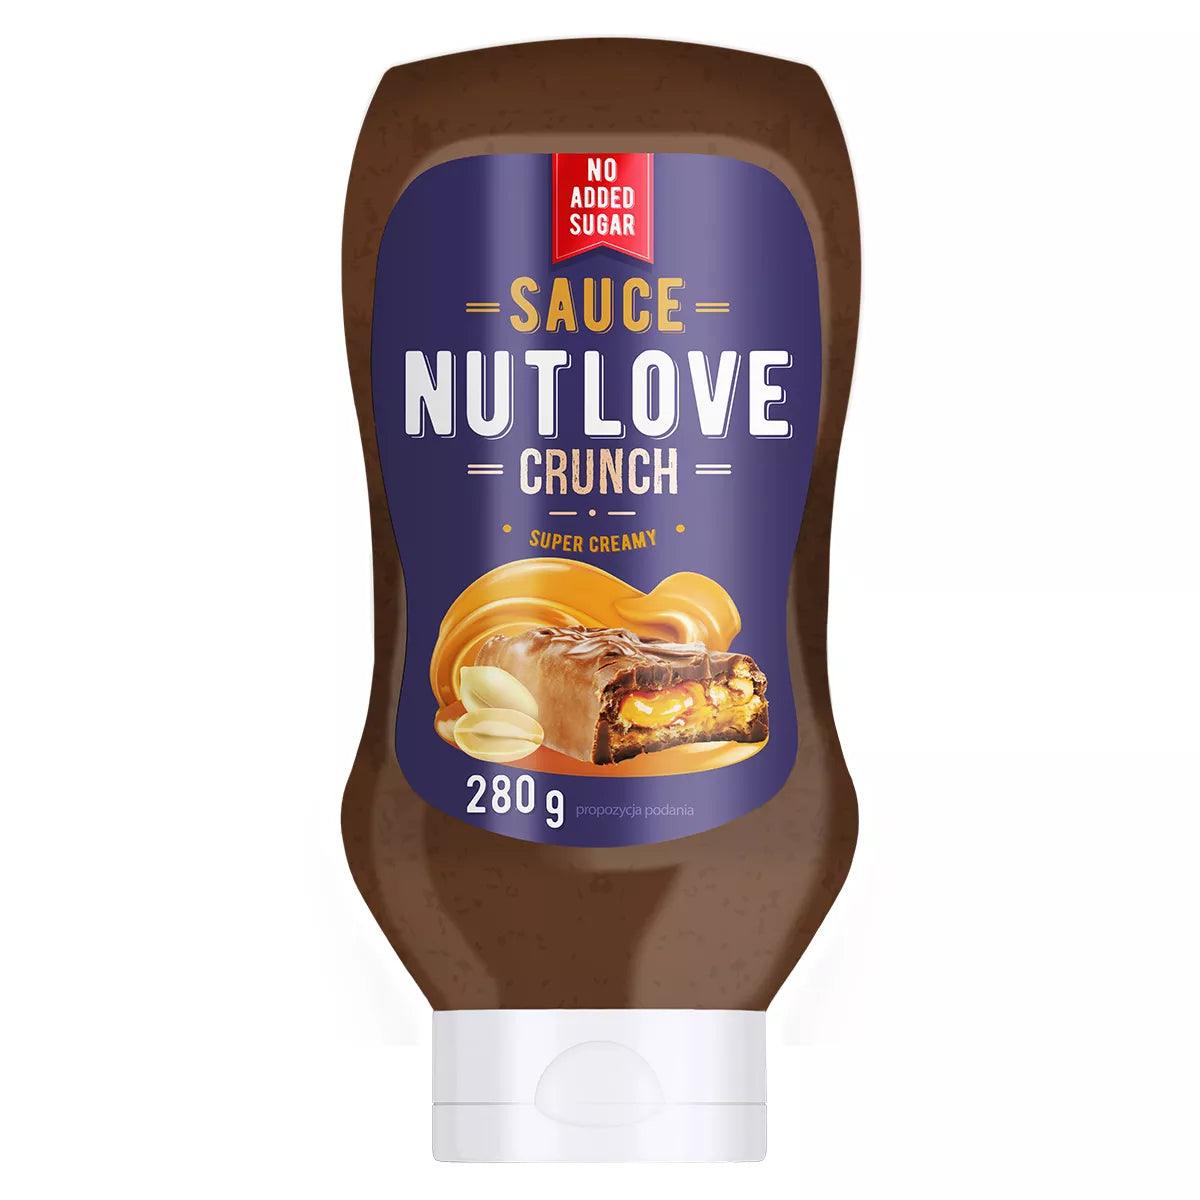 ALL NUTRITION NUTLOVE Sauce 280g - Supplement Support